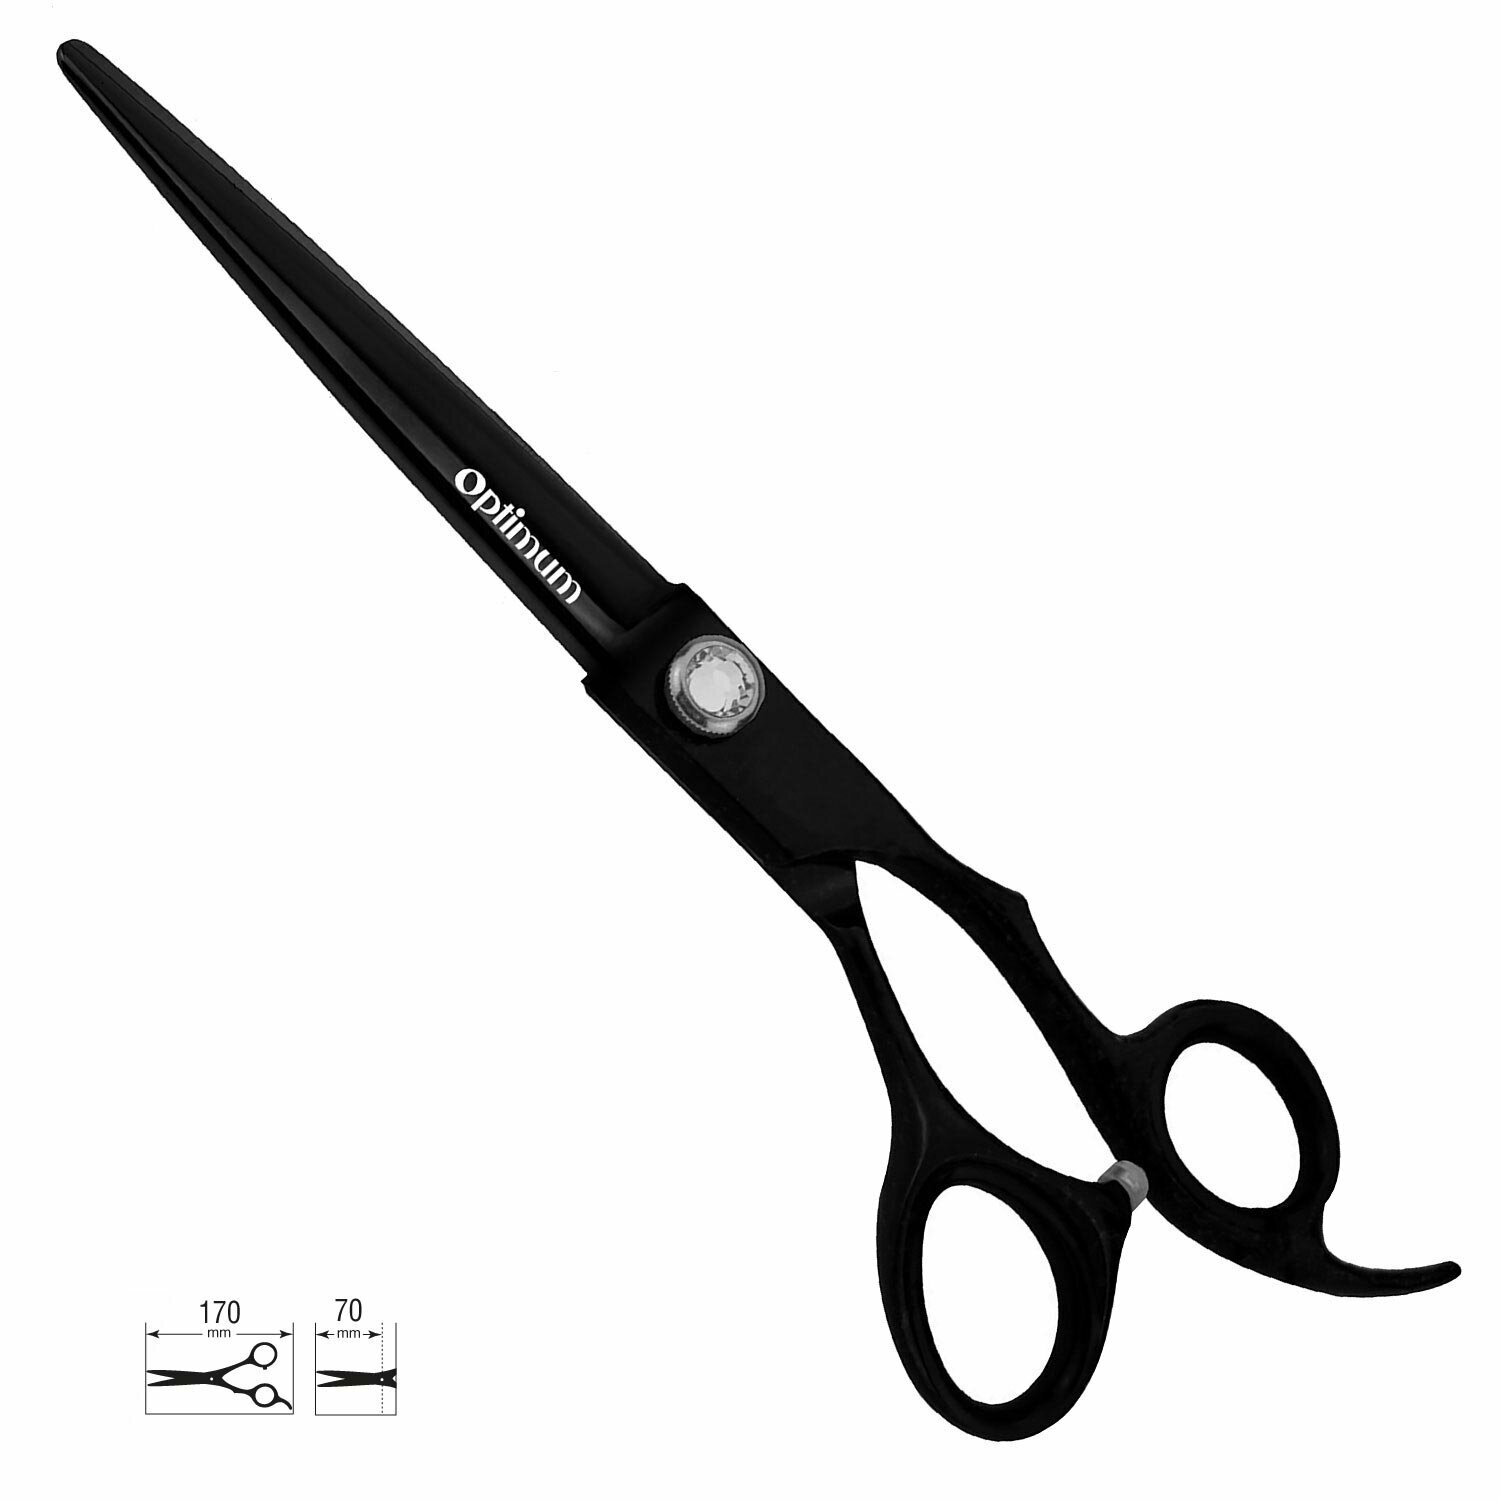 Japanese Steel hair scissors 19 cm